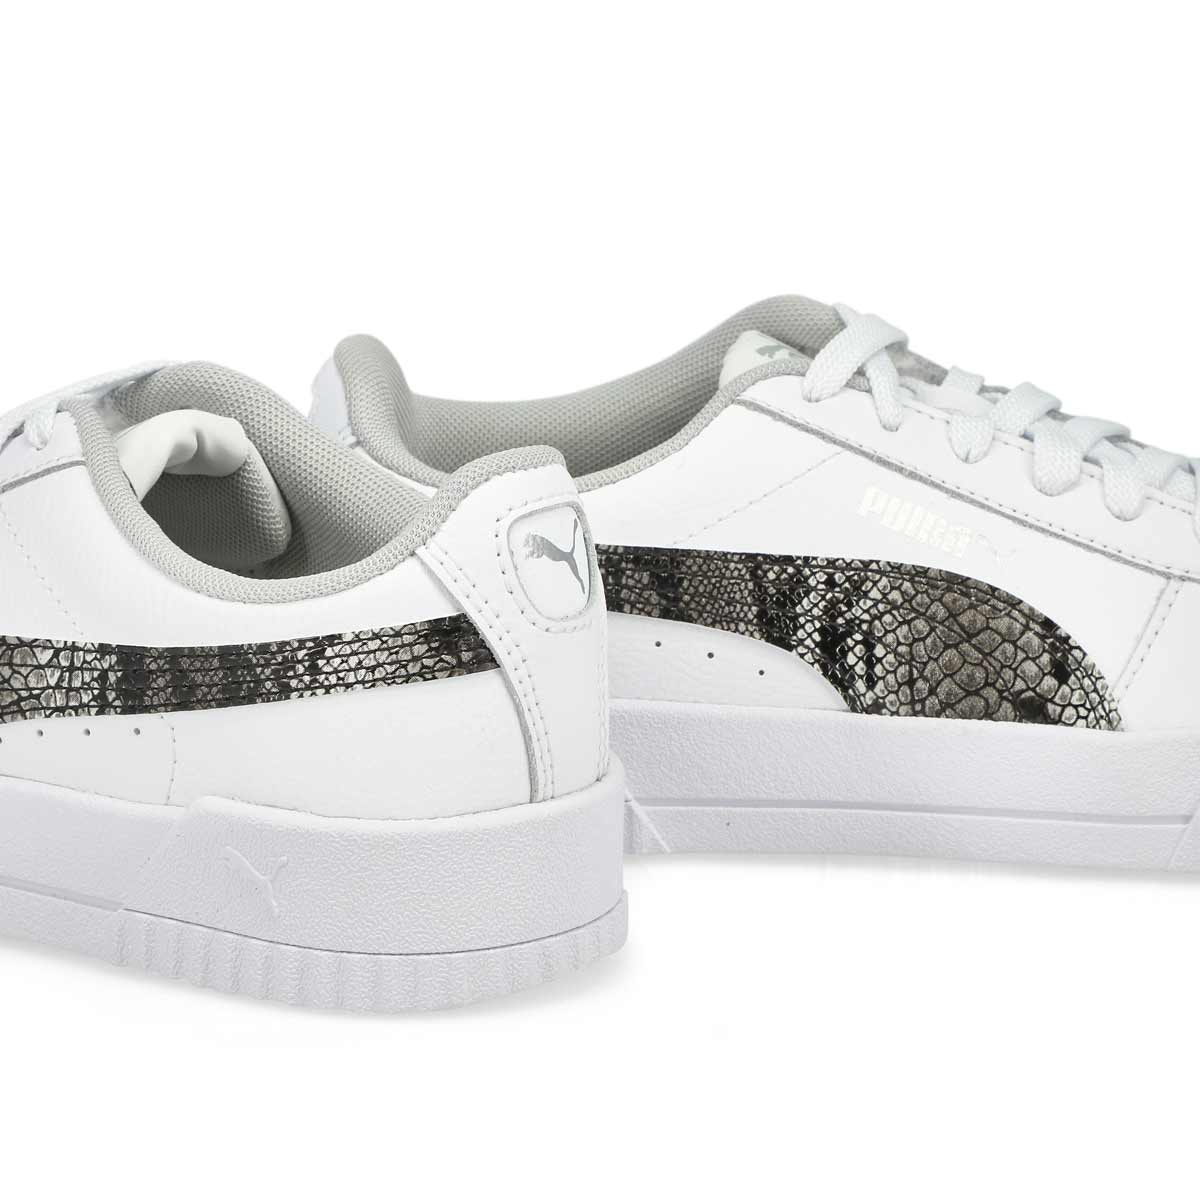 Women's Carina L Snake FS Sneaker - White/Grey